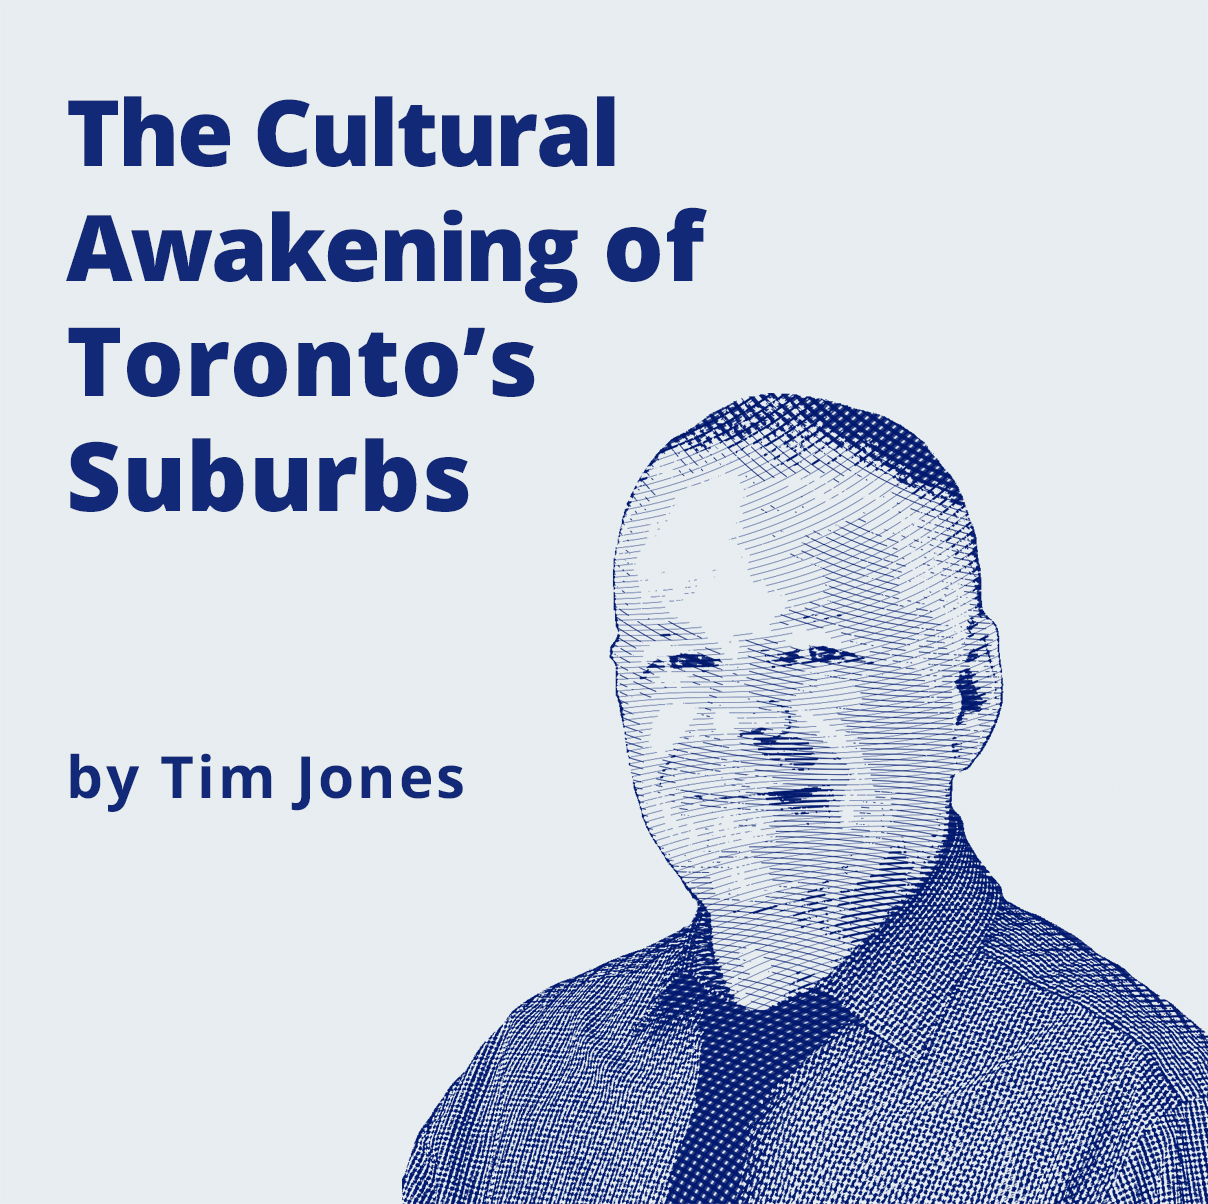 image - The Cultural Awakening of Toronto's Suburbs by Tim Jones